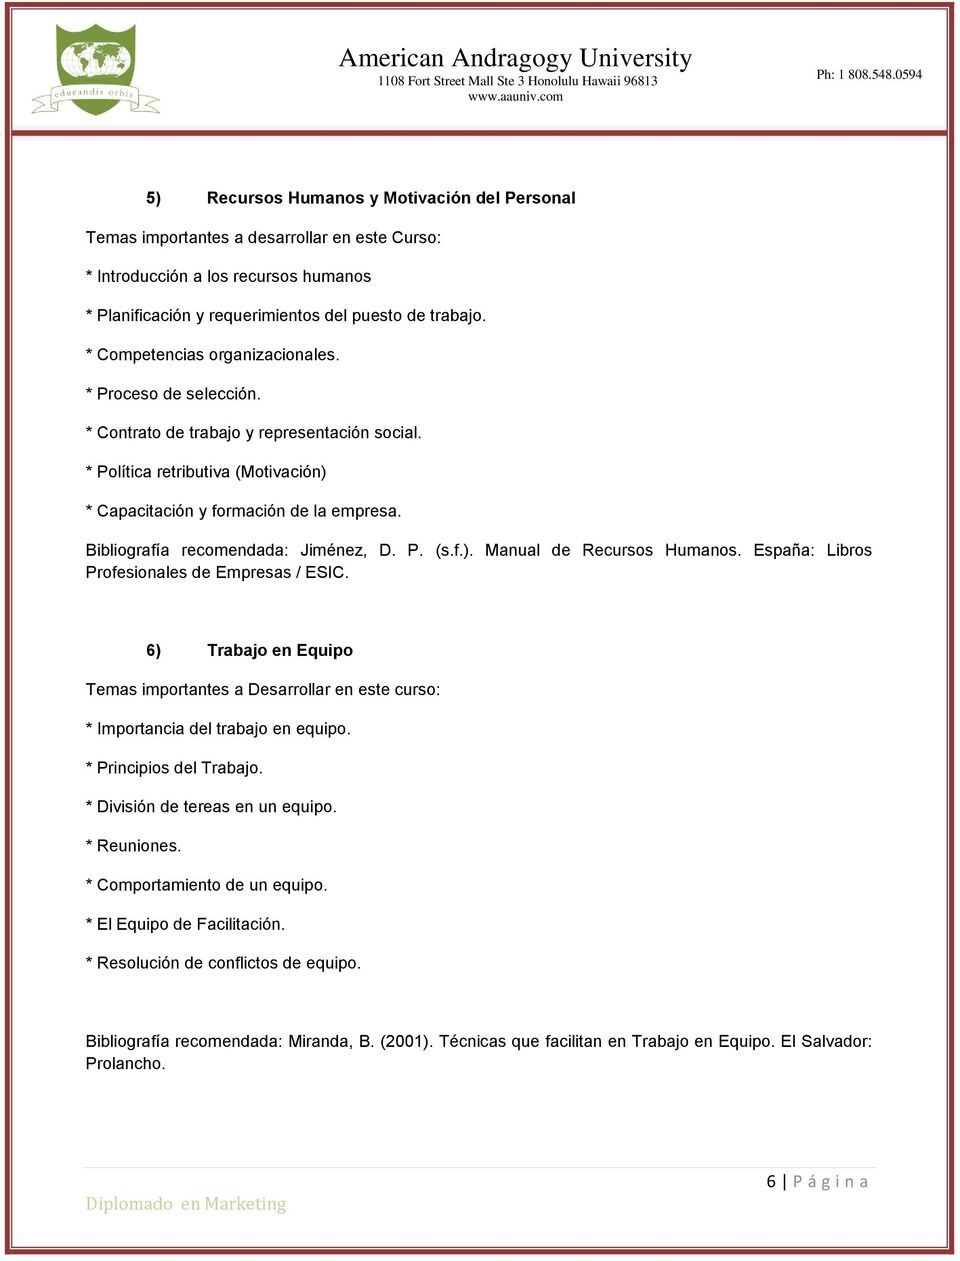 Bibliografía recomendada: Jiménez, D. P. (s.f.). Manual de Recursos Humanos. España: Libros Profesionales de Empresas / ESIC.